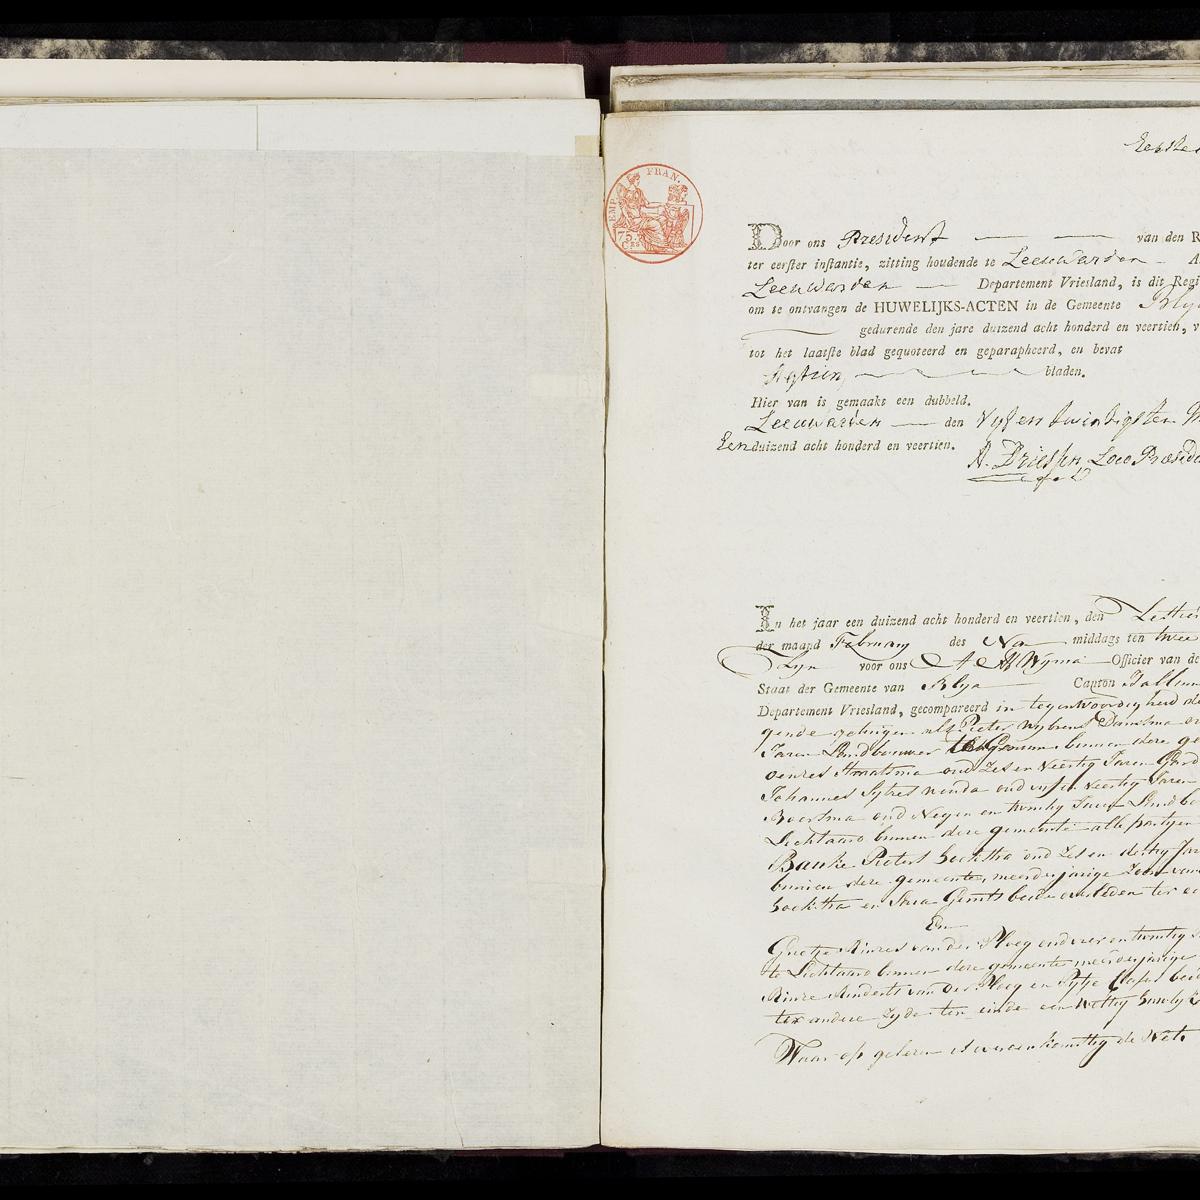 Civil registry of marriages, Blija, 1814, record 1